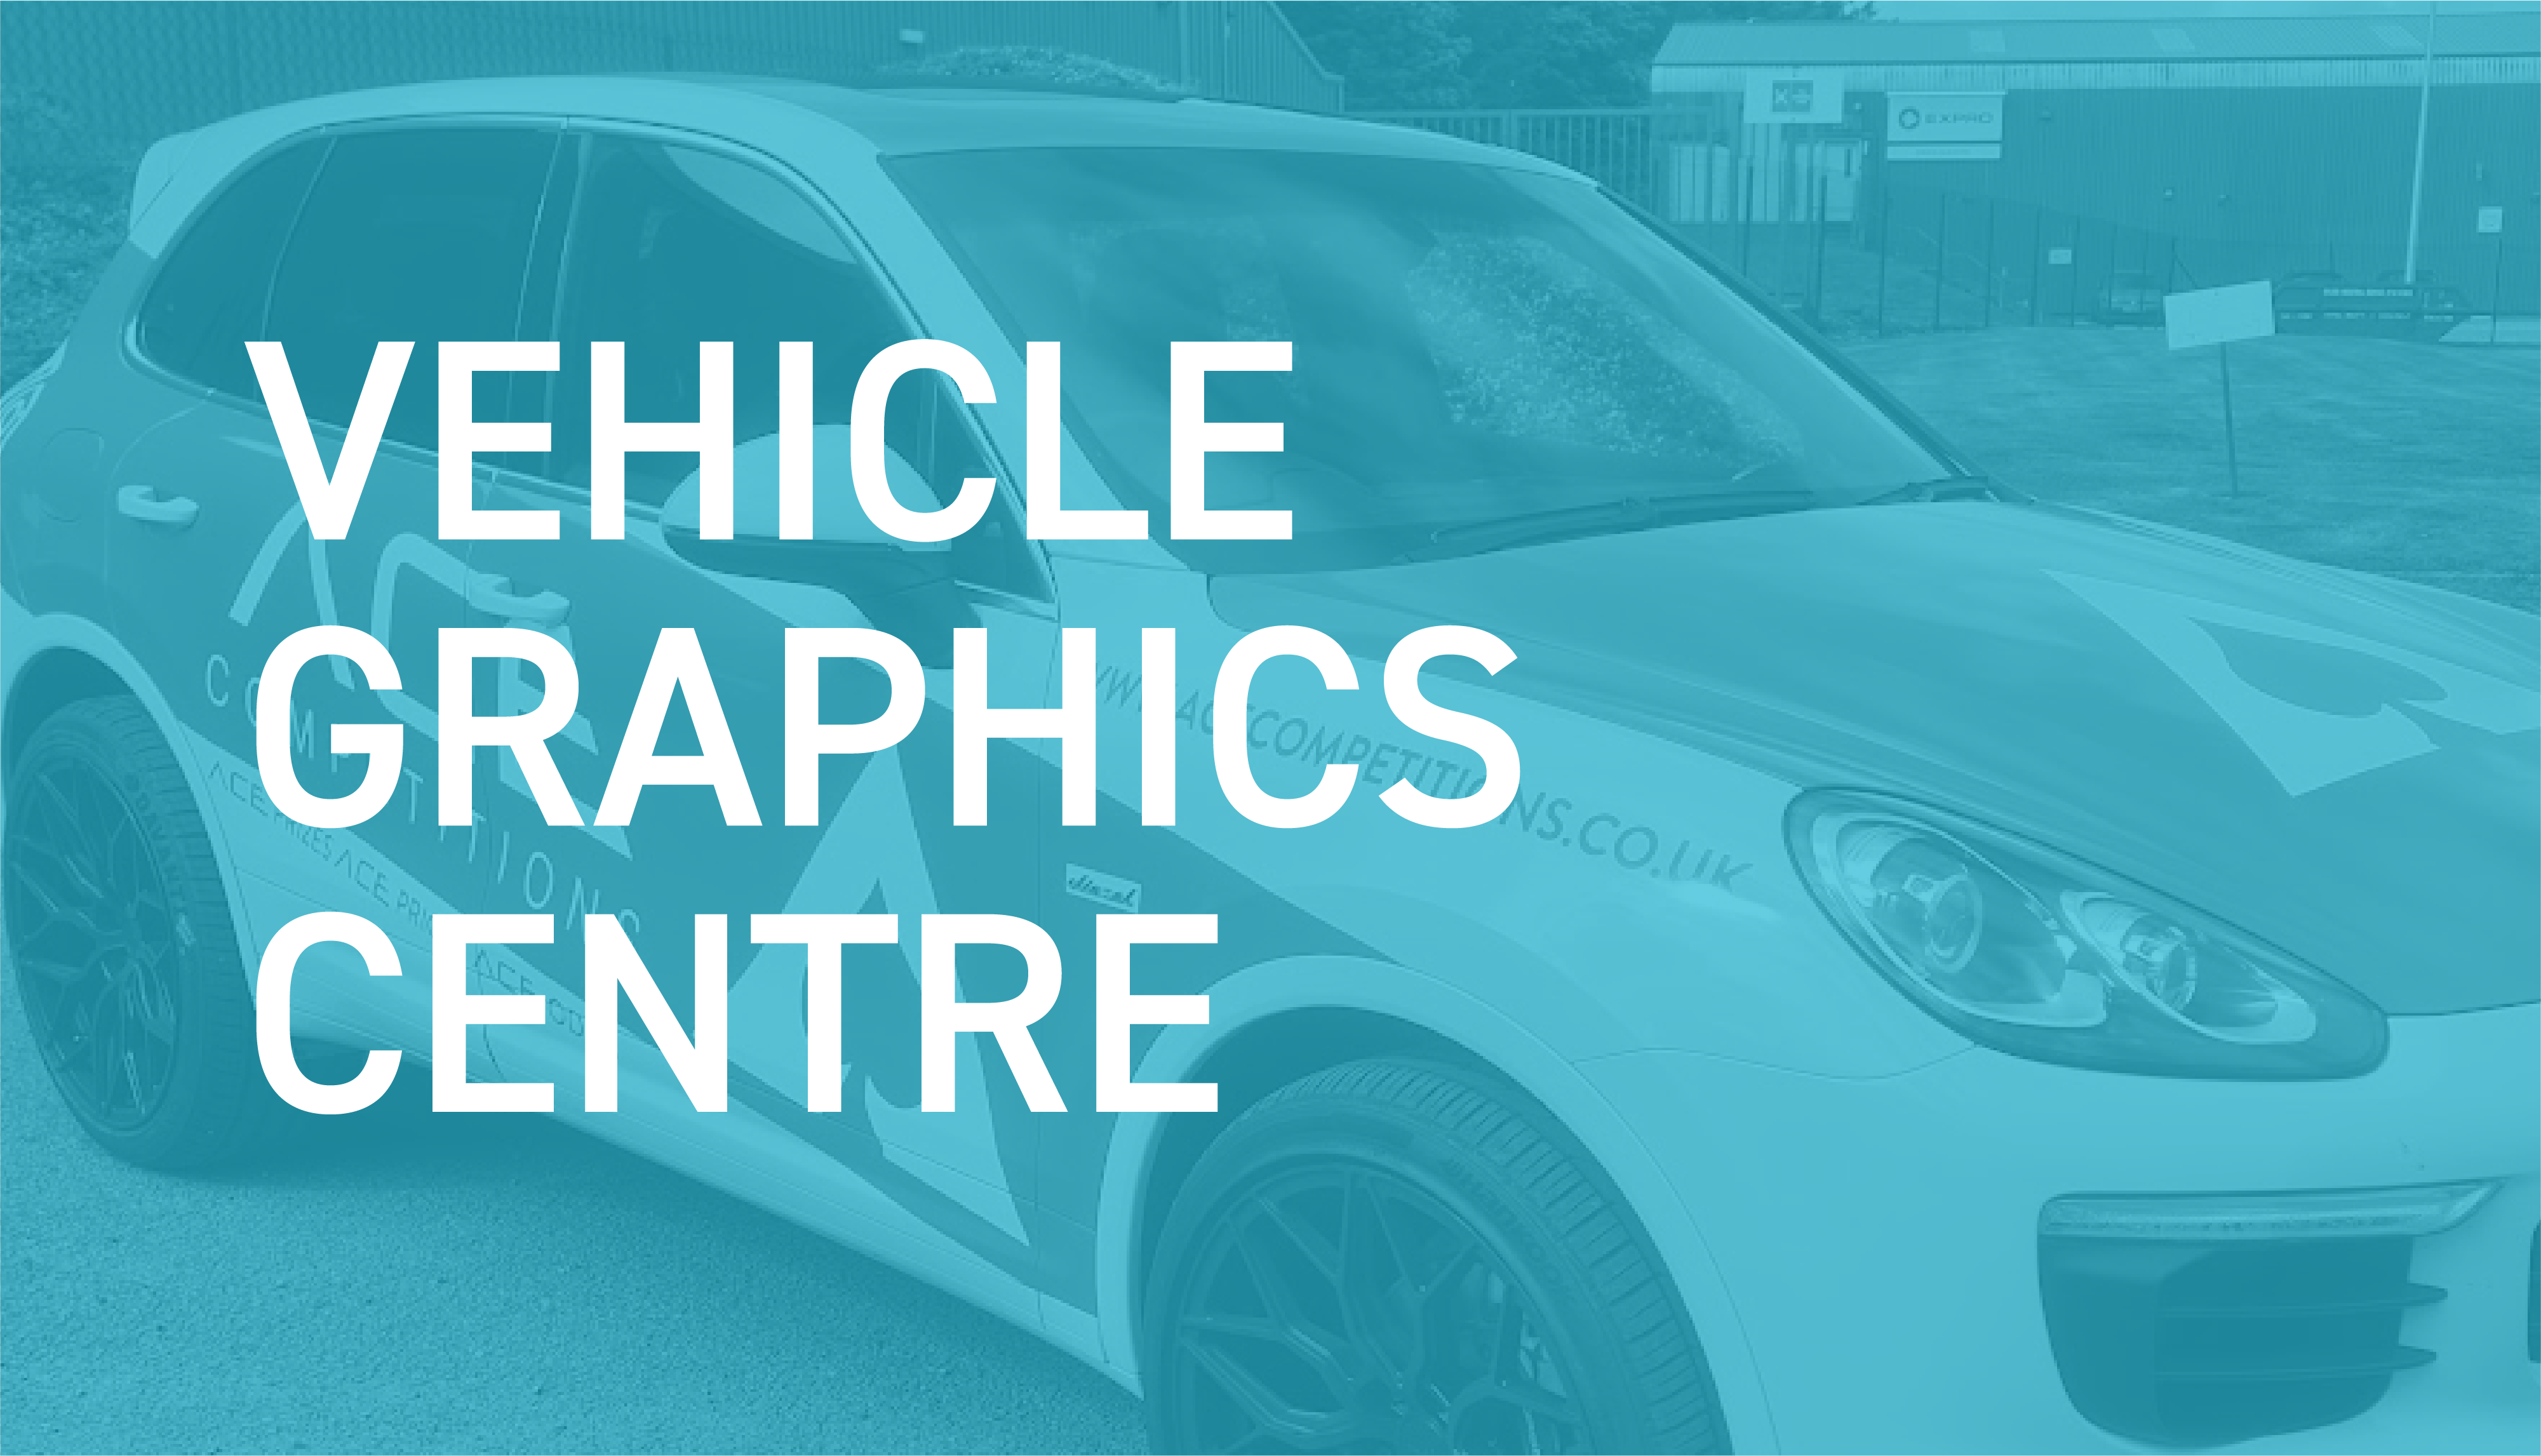 Visit the Vehicle Graphics Centre